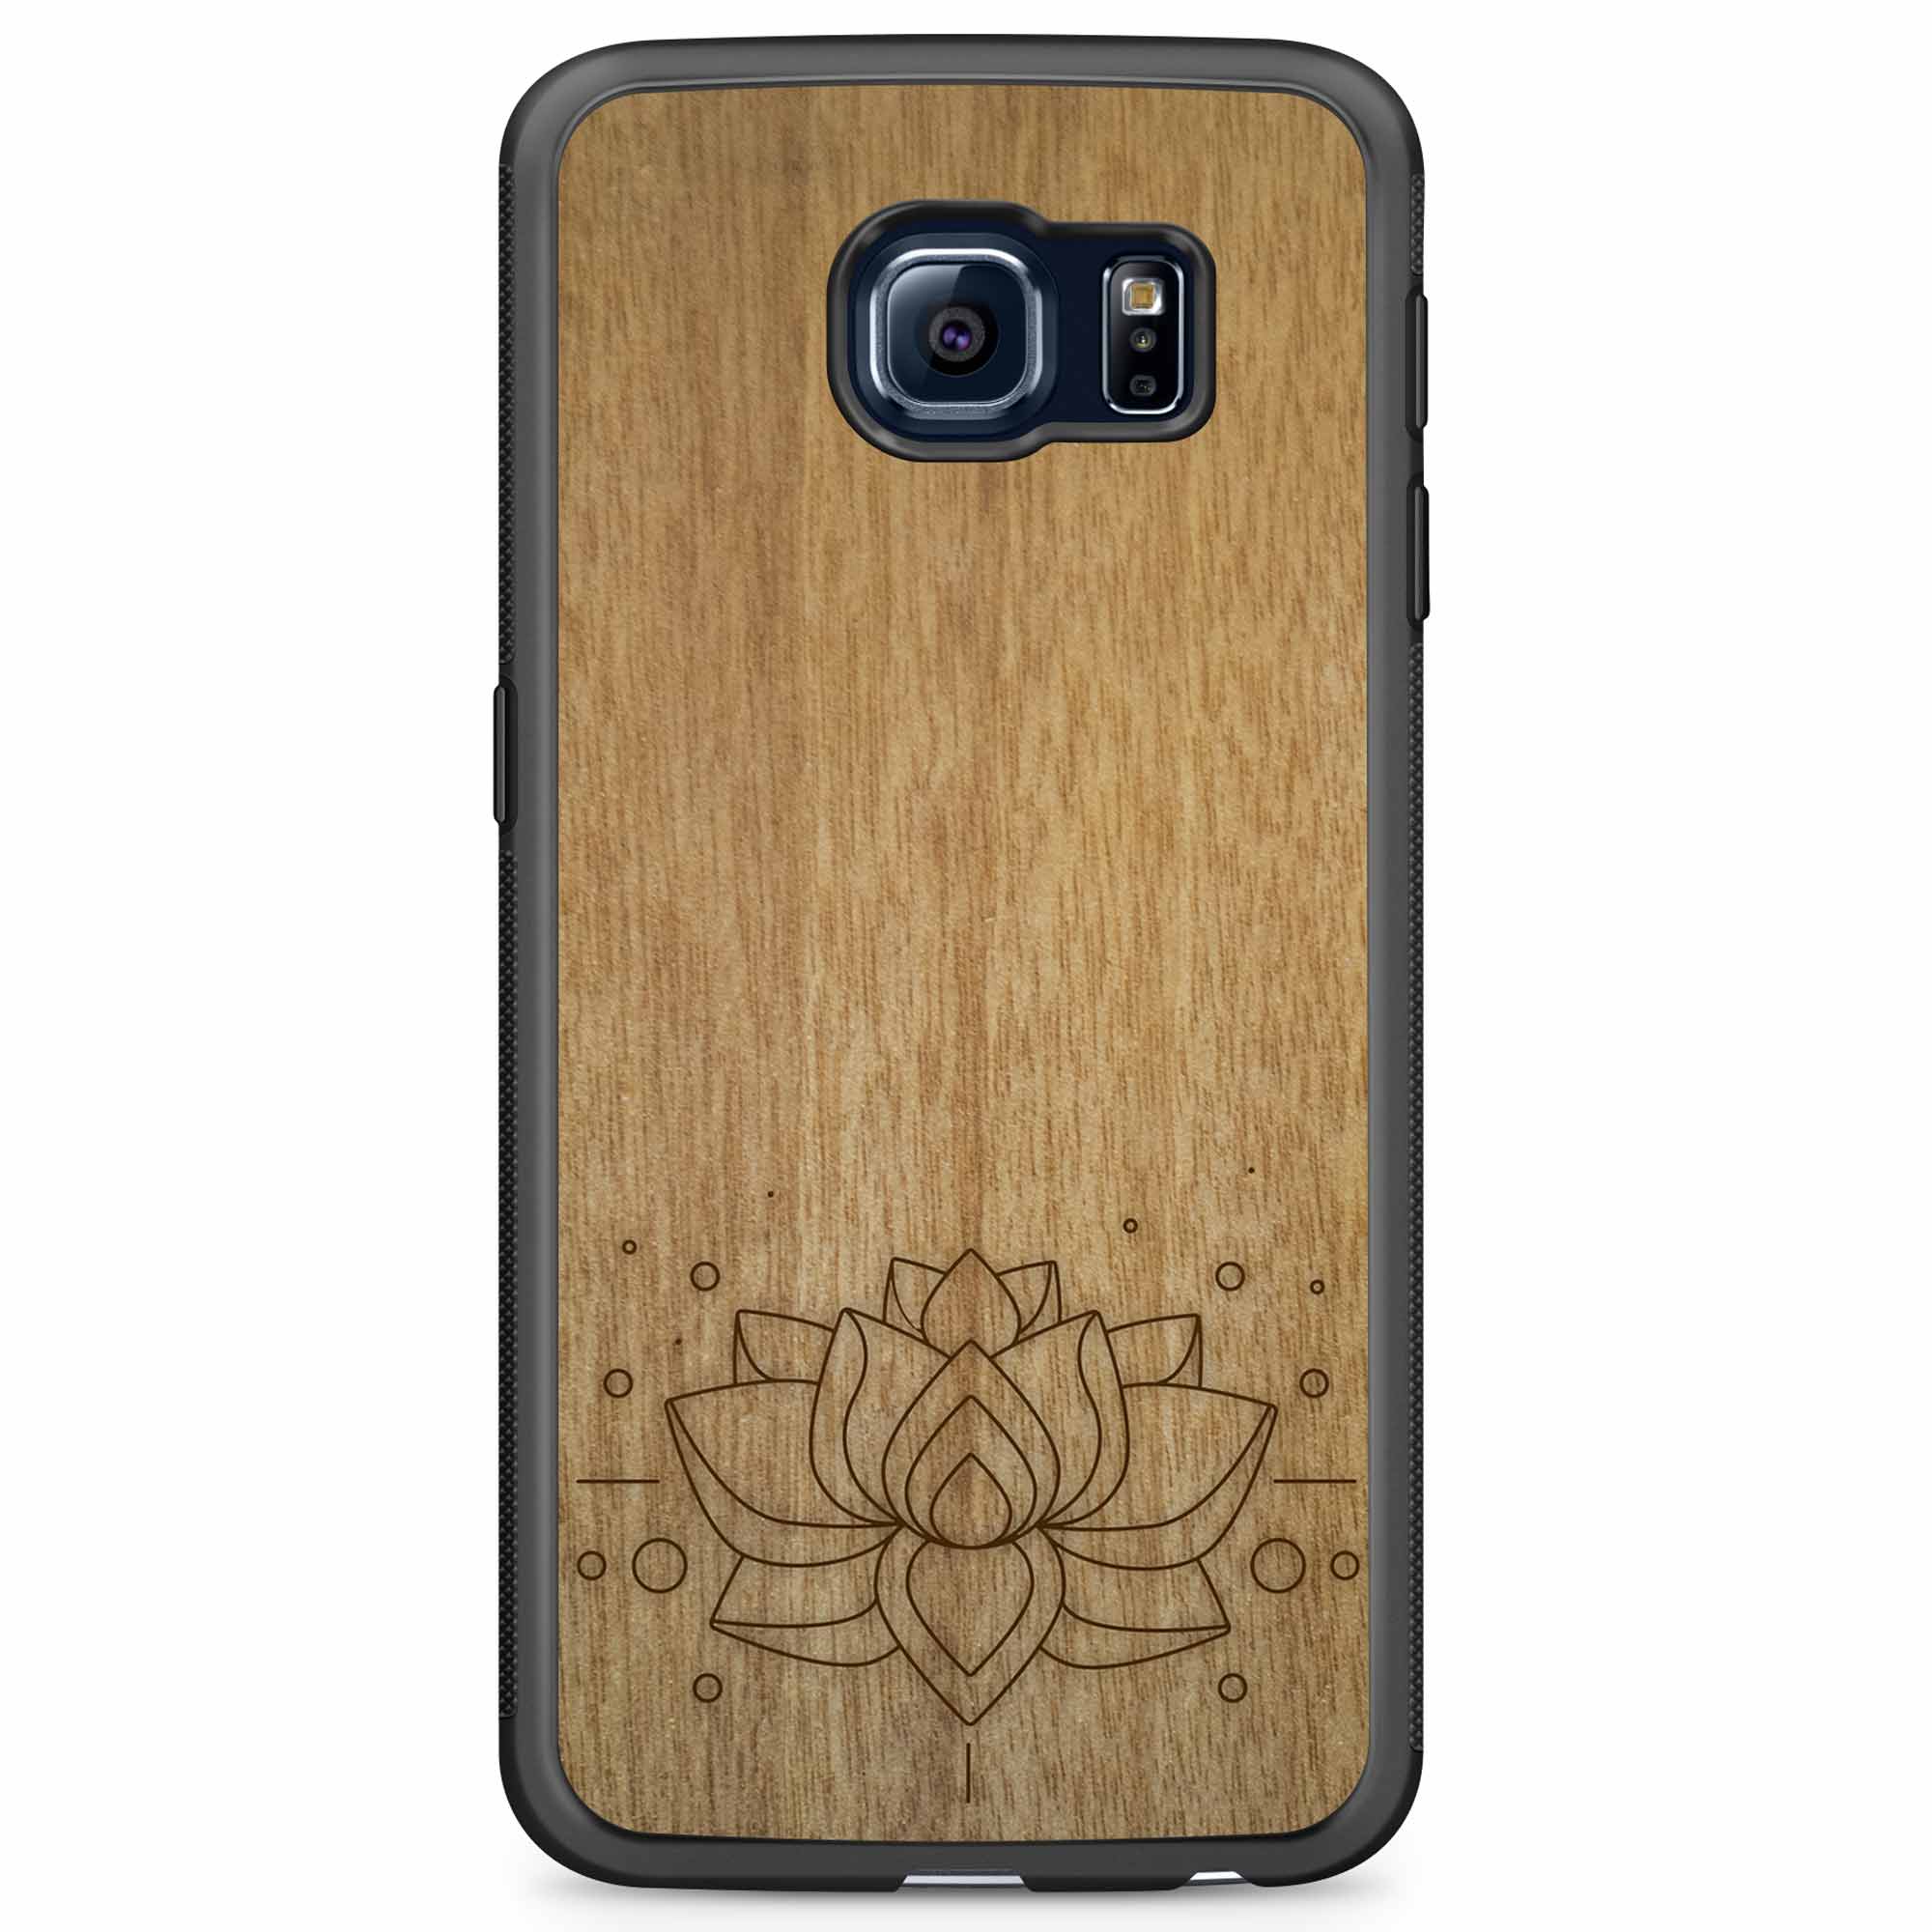 Estuche de madera para teléfono con grabado Lotus Samsung S6 Edge